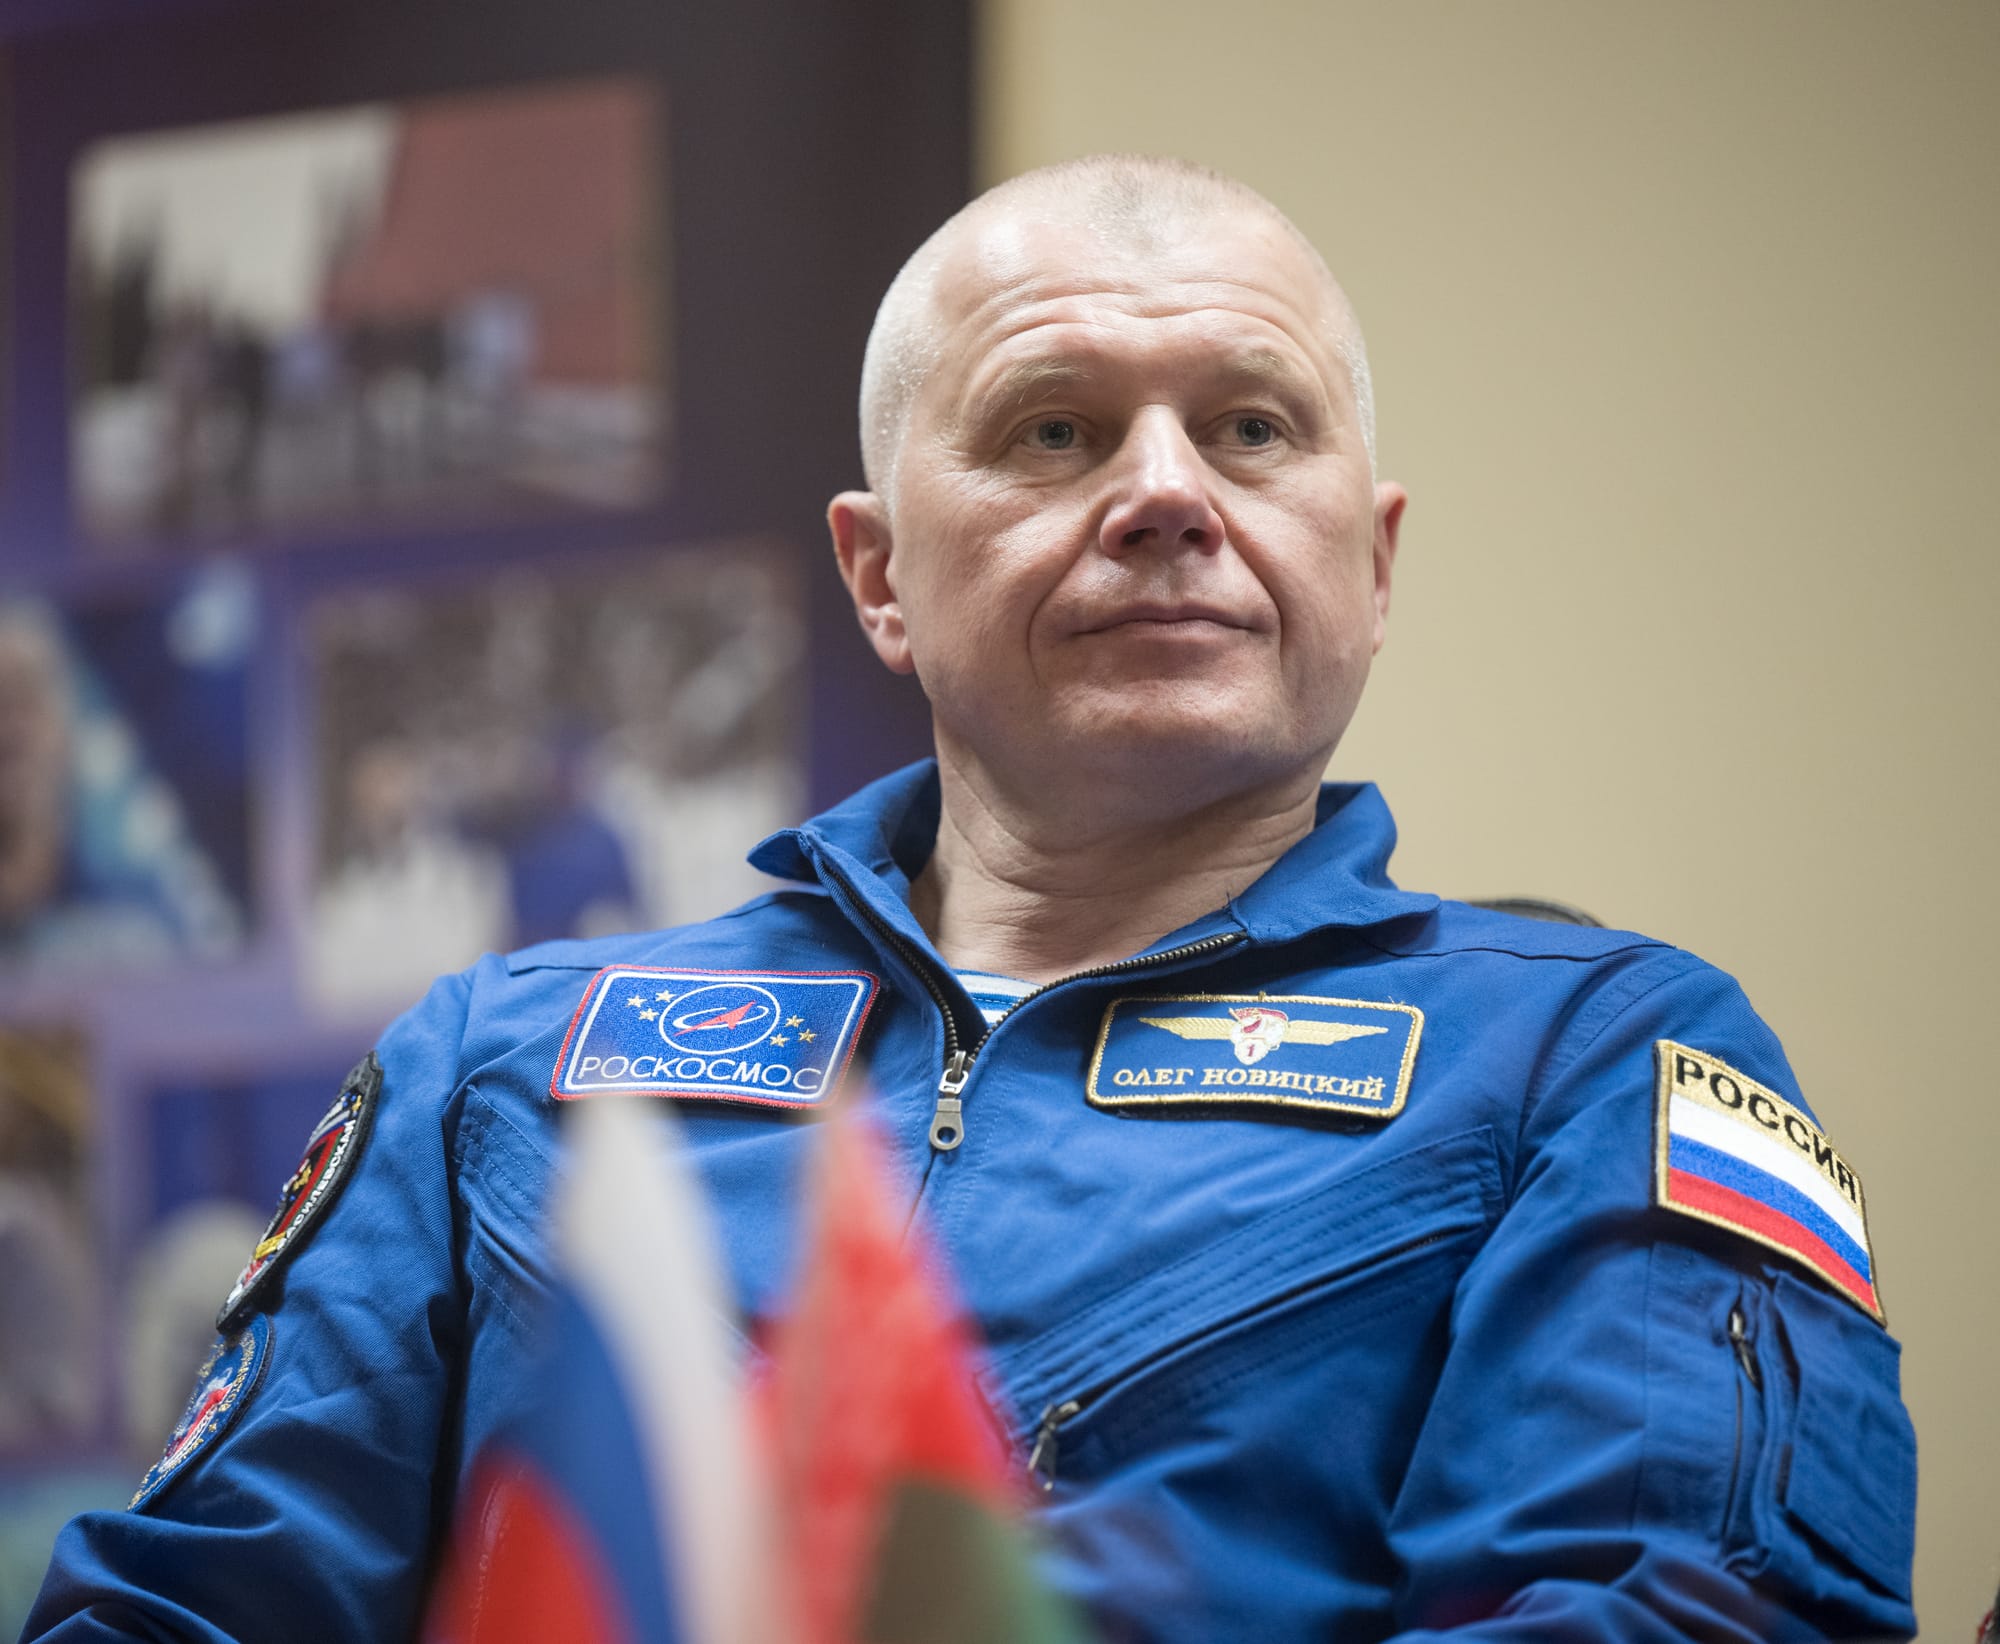 Oleg Novitskiy during a press conference prior to launch. ©NASA